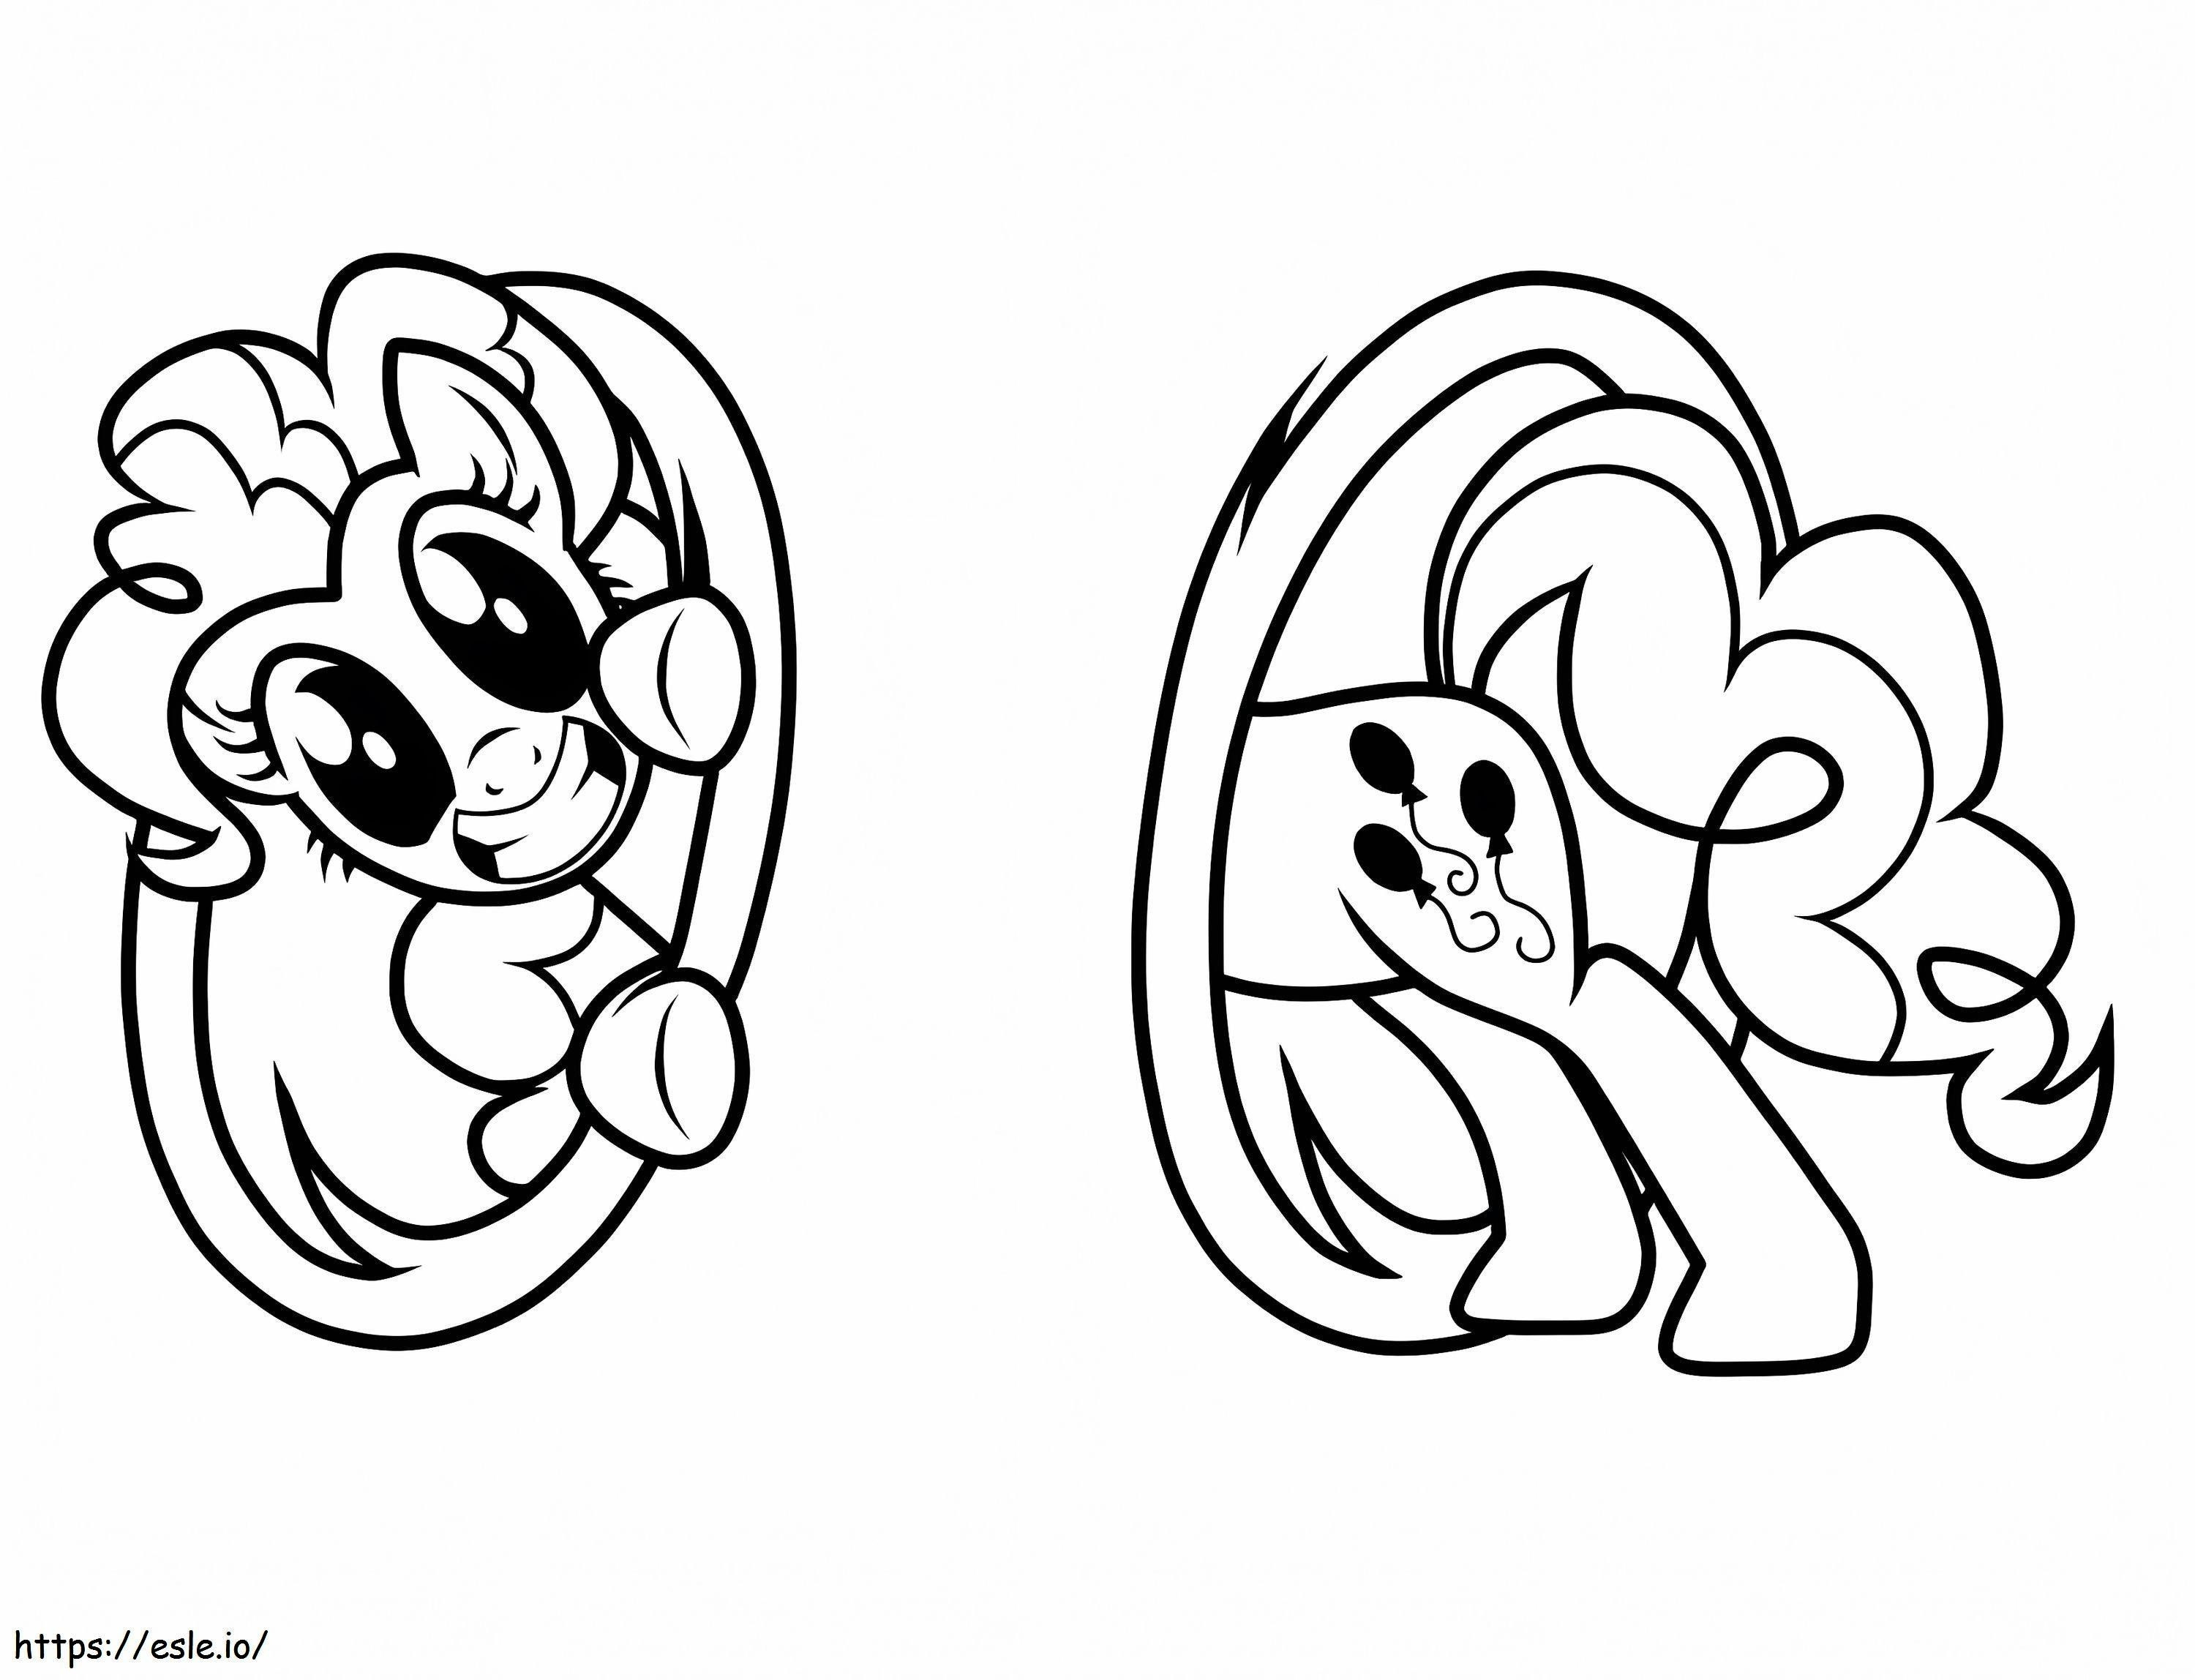 Pinkie Pie Pony coloring page